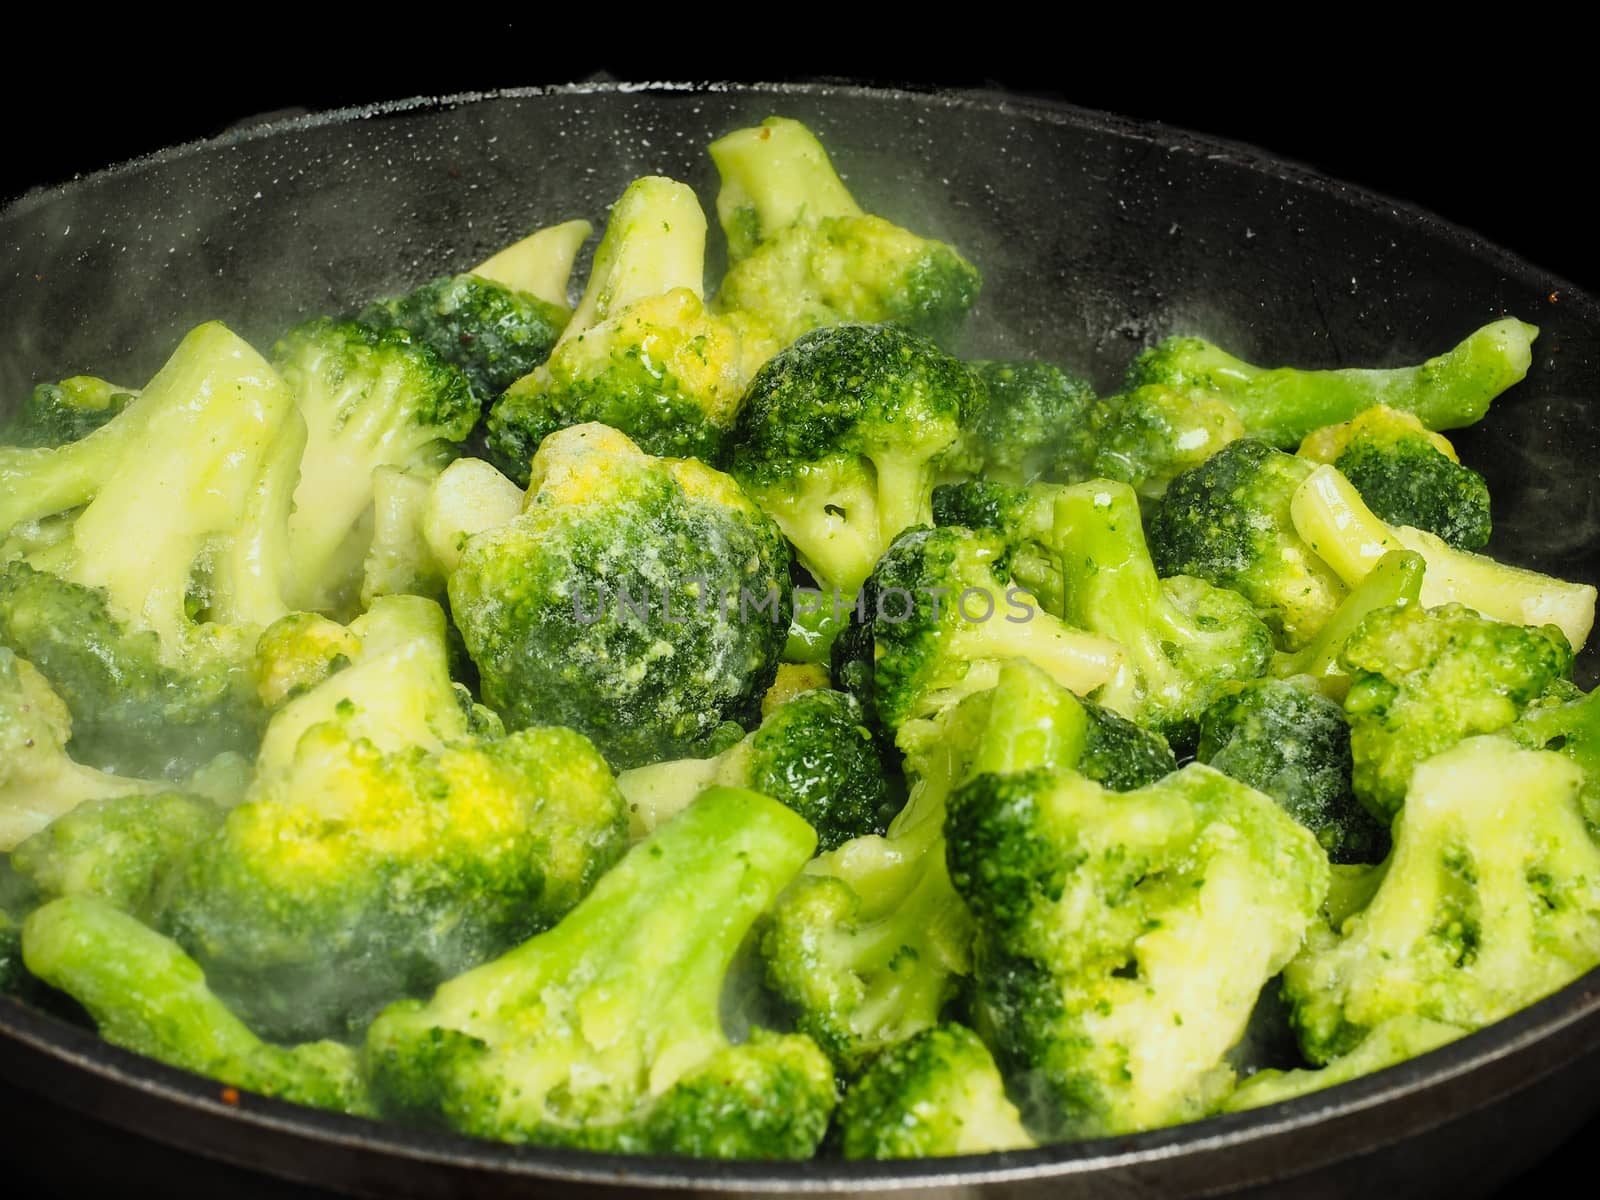 Thawing frozen green broccoli in a hot fry pan by Arvebettum